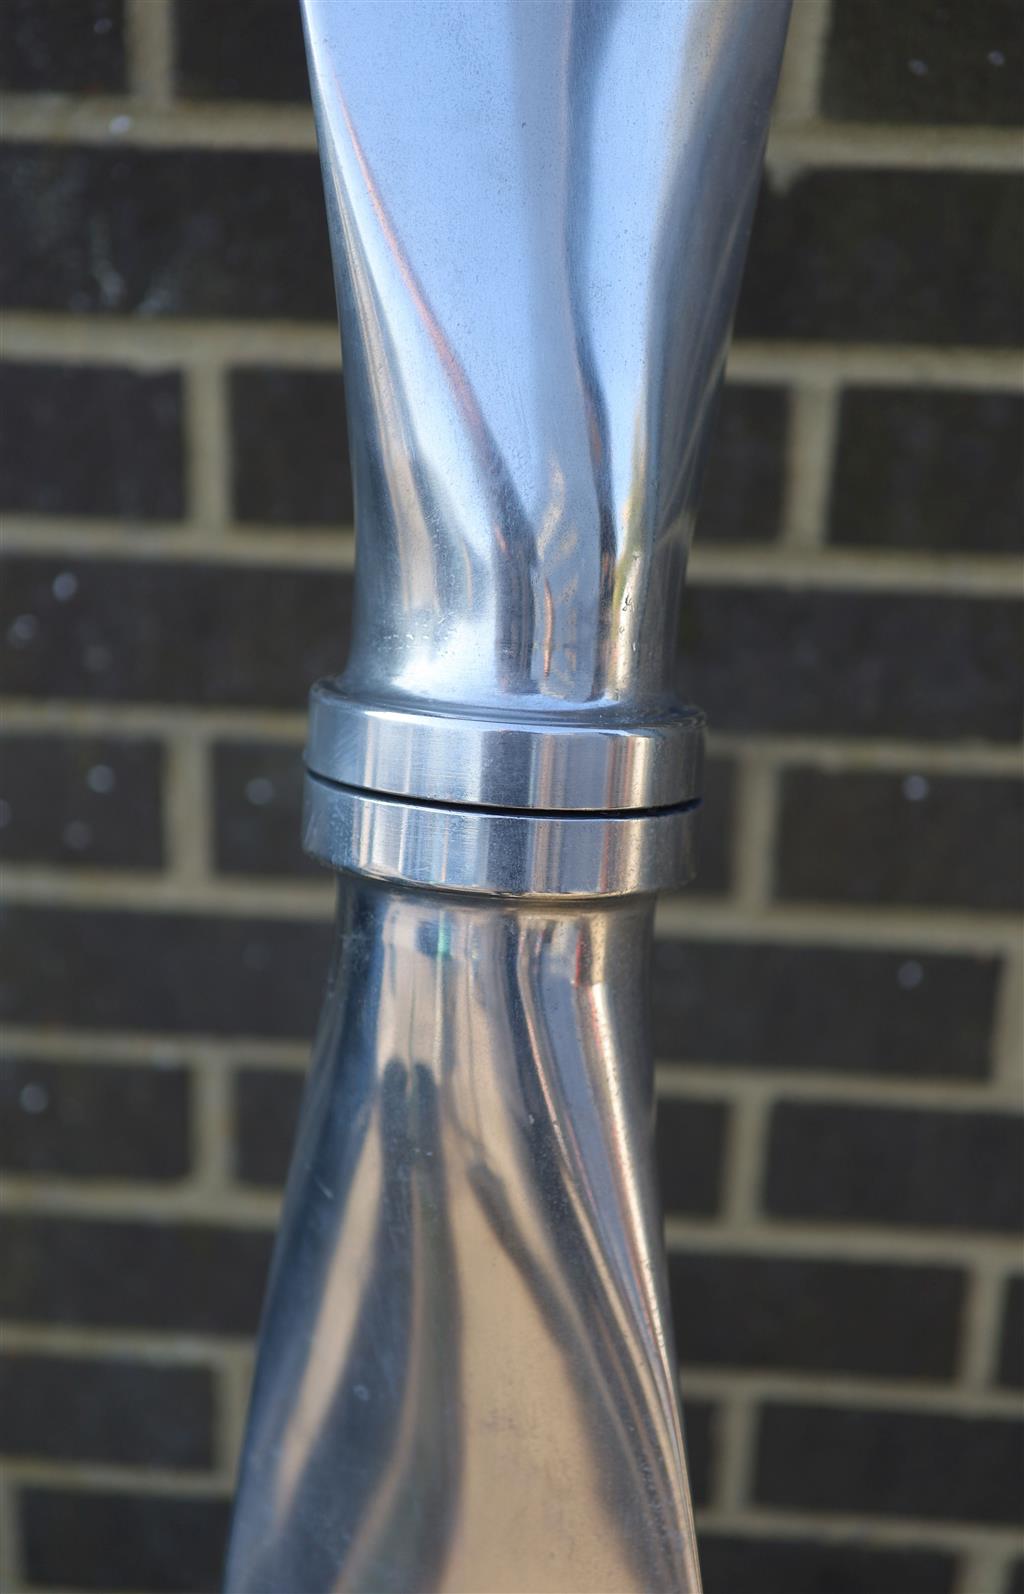 A Hartzell aluminium propeller blade ornament, length 228cm